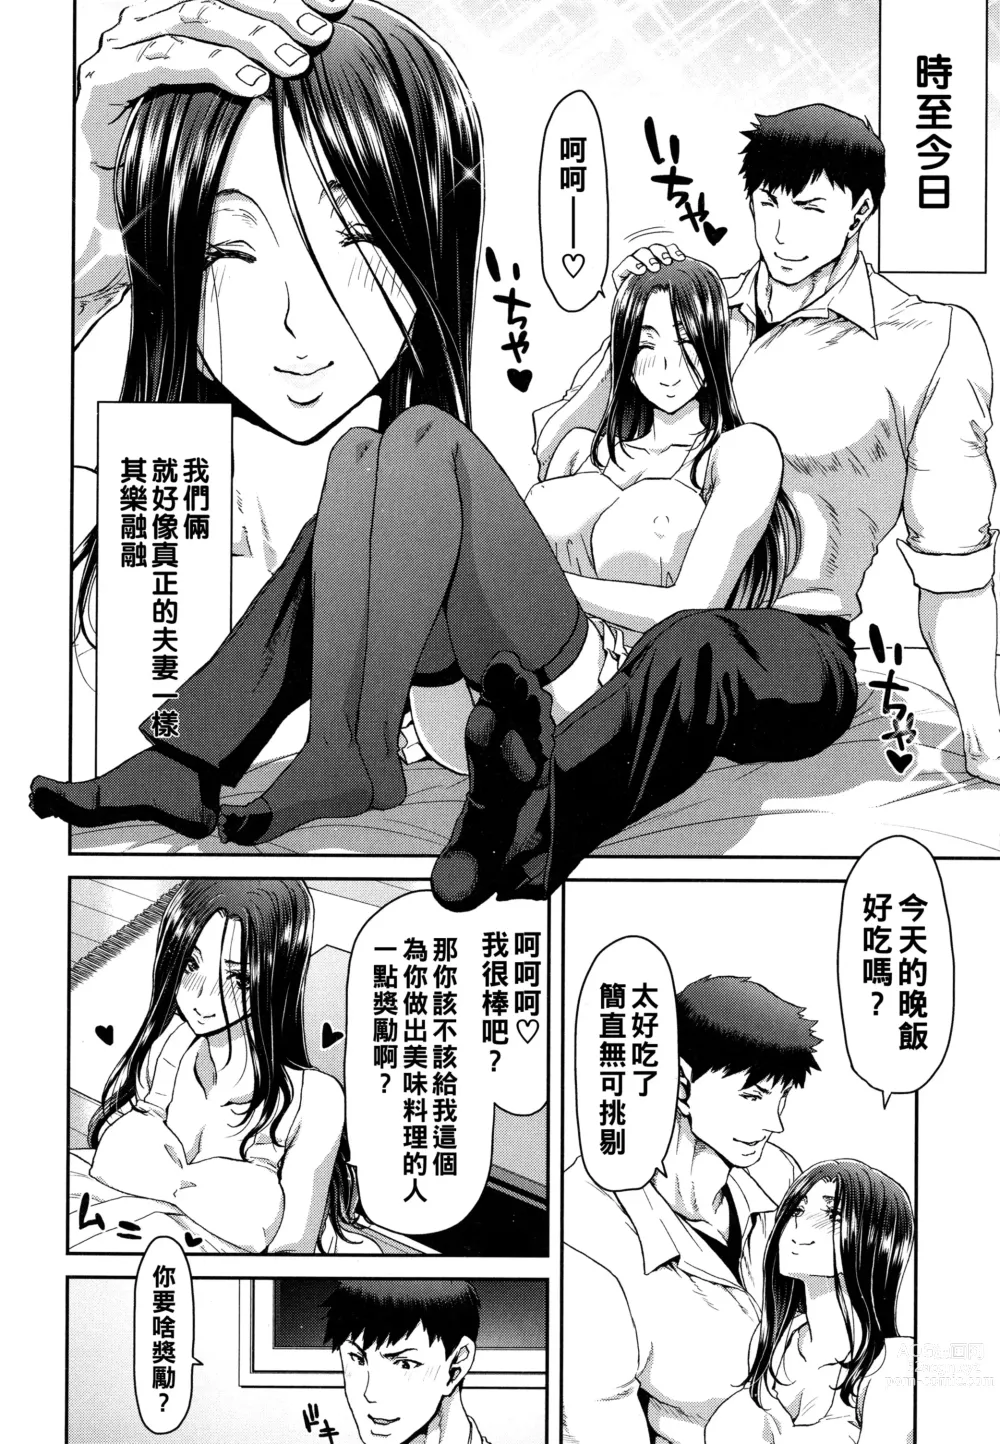 Page 18 of manga Iede Onna o Hirottara - When I picked up a runaway girl.